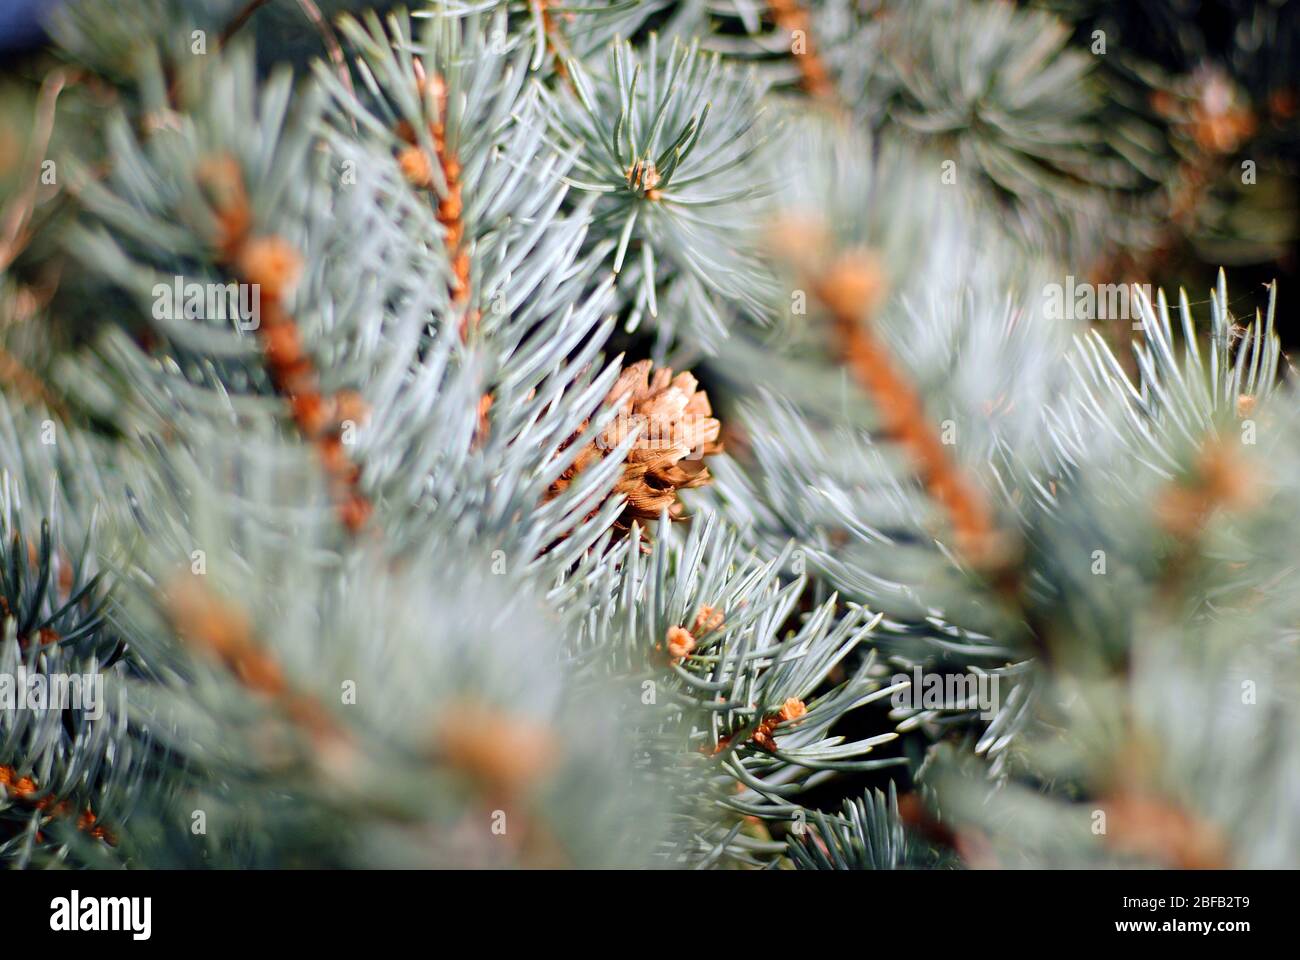 pine tree branche detail view Stock Photo